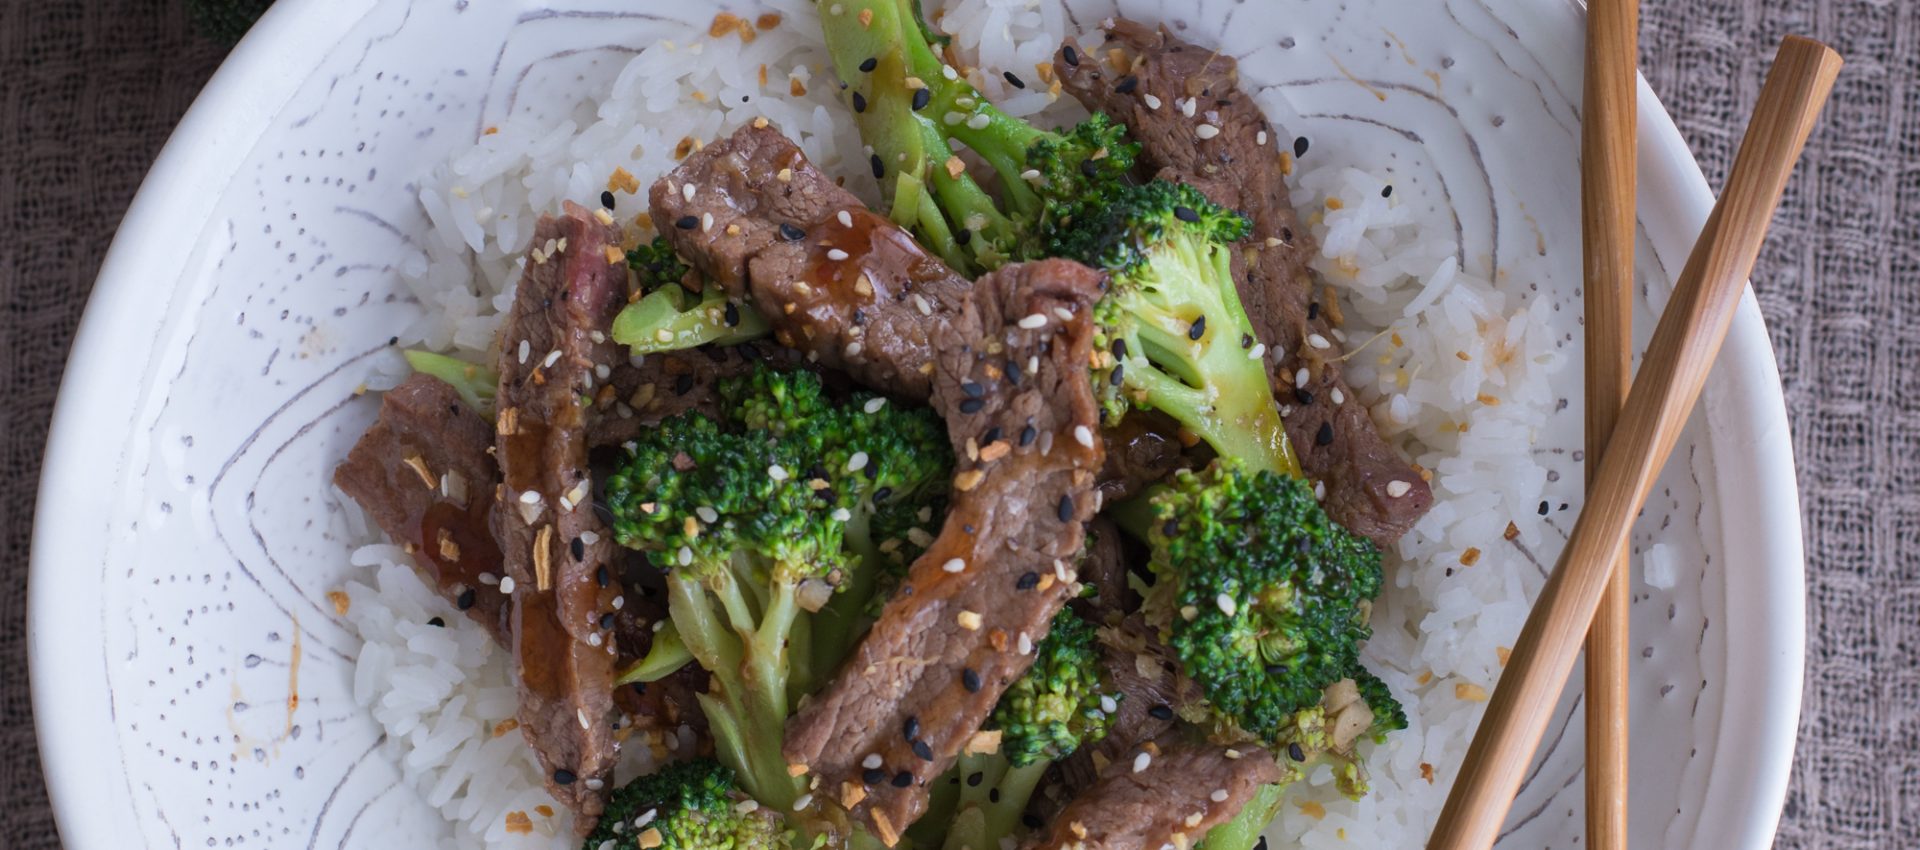 Beef and Broccoli Stir Fry with Jasmine Rice – Grain Trust